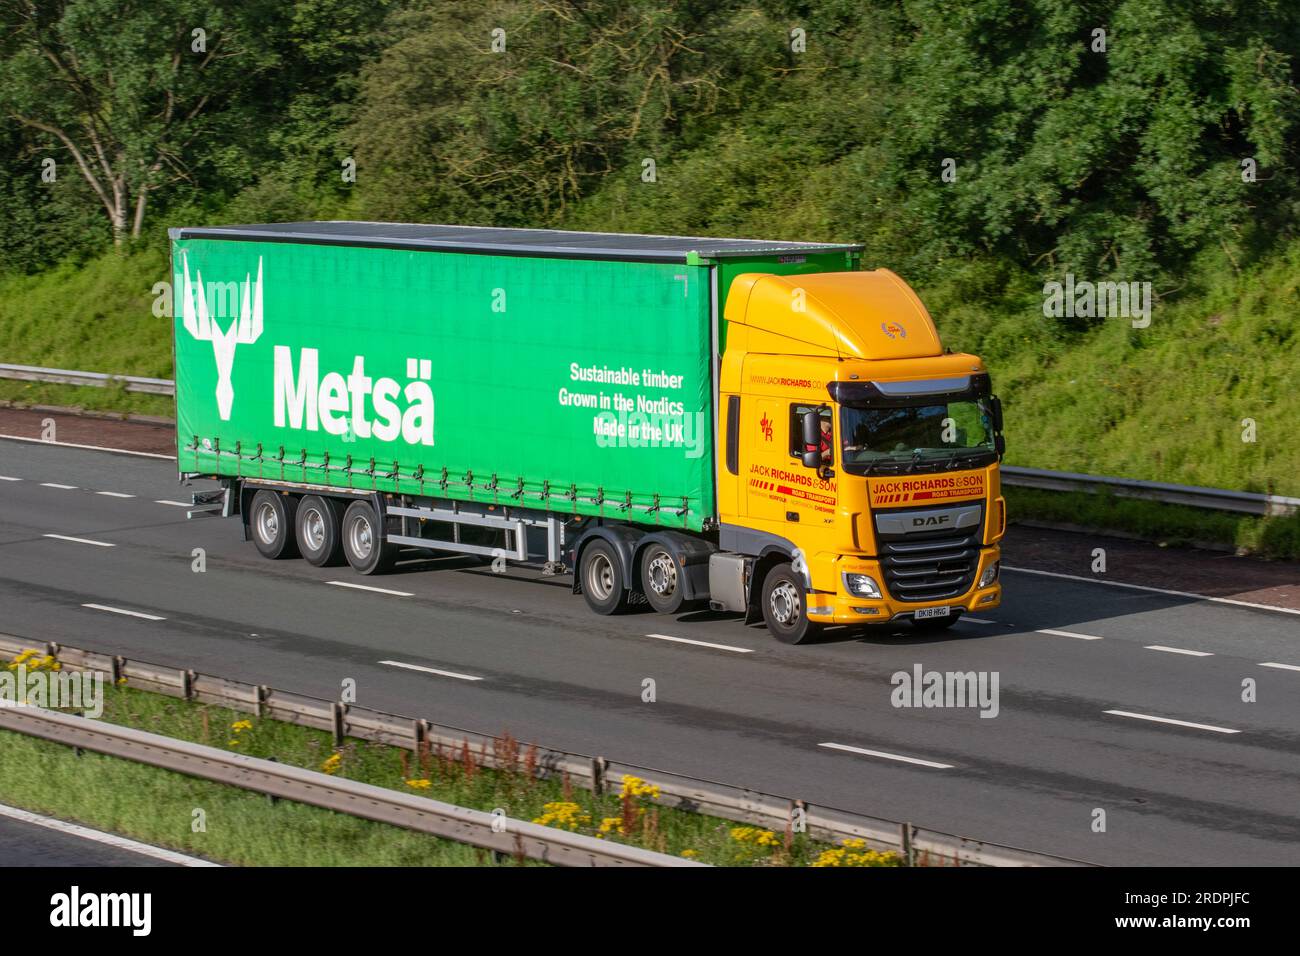 METASA Sustainable Timber Supplies Grown in Nordic' qui emprunte l'autoroute M6 dans le Grand Manchester, au Royaume-Uni Banque D'Images